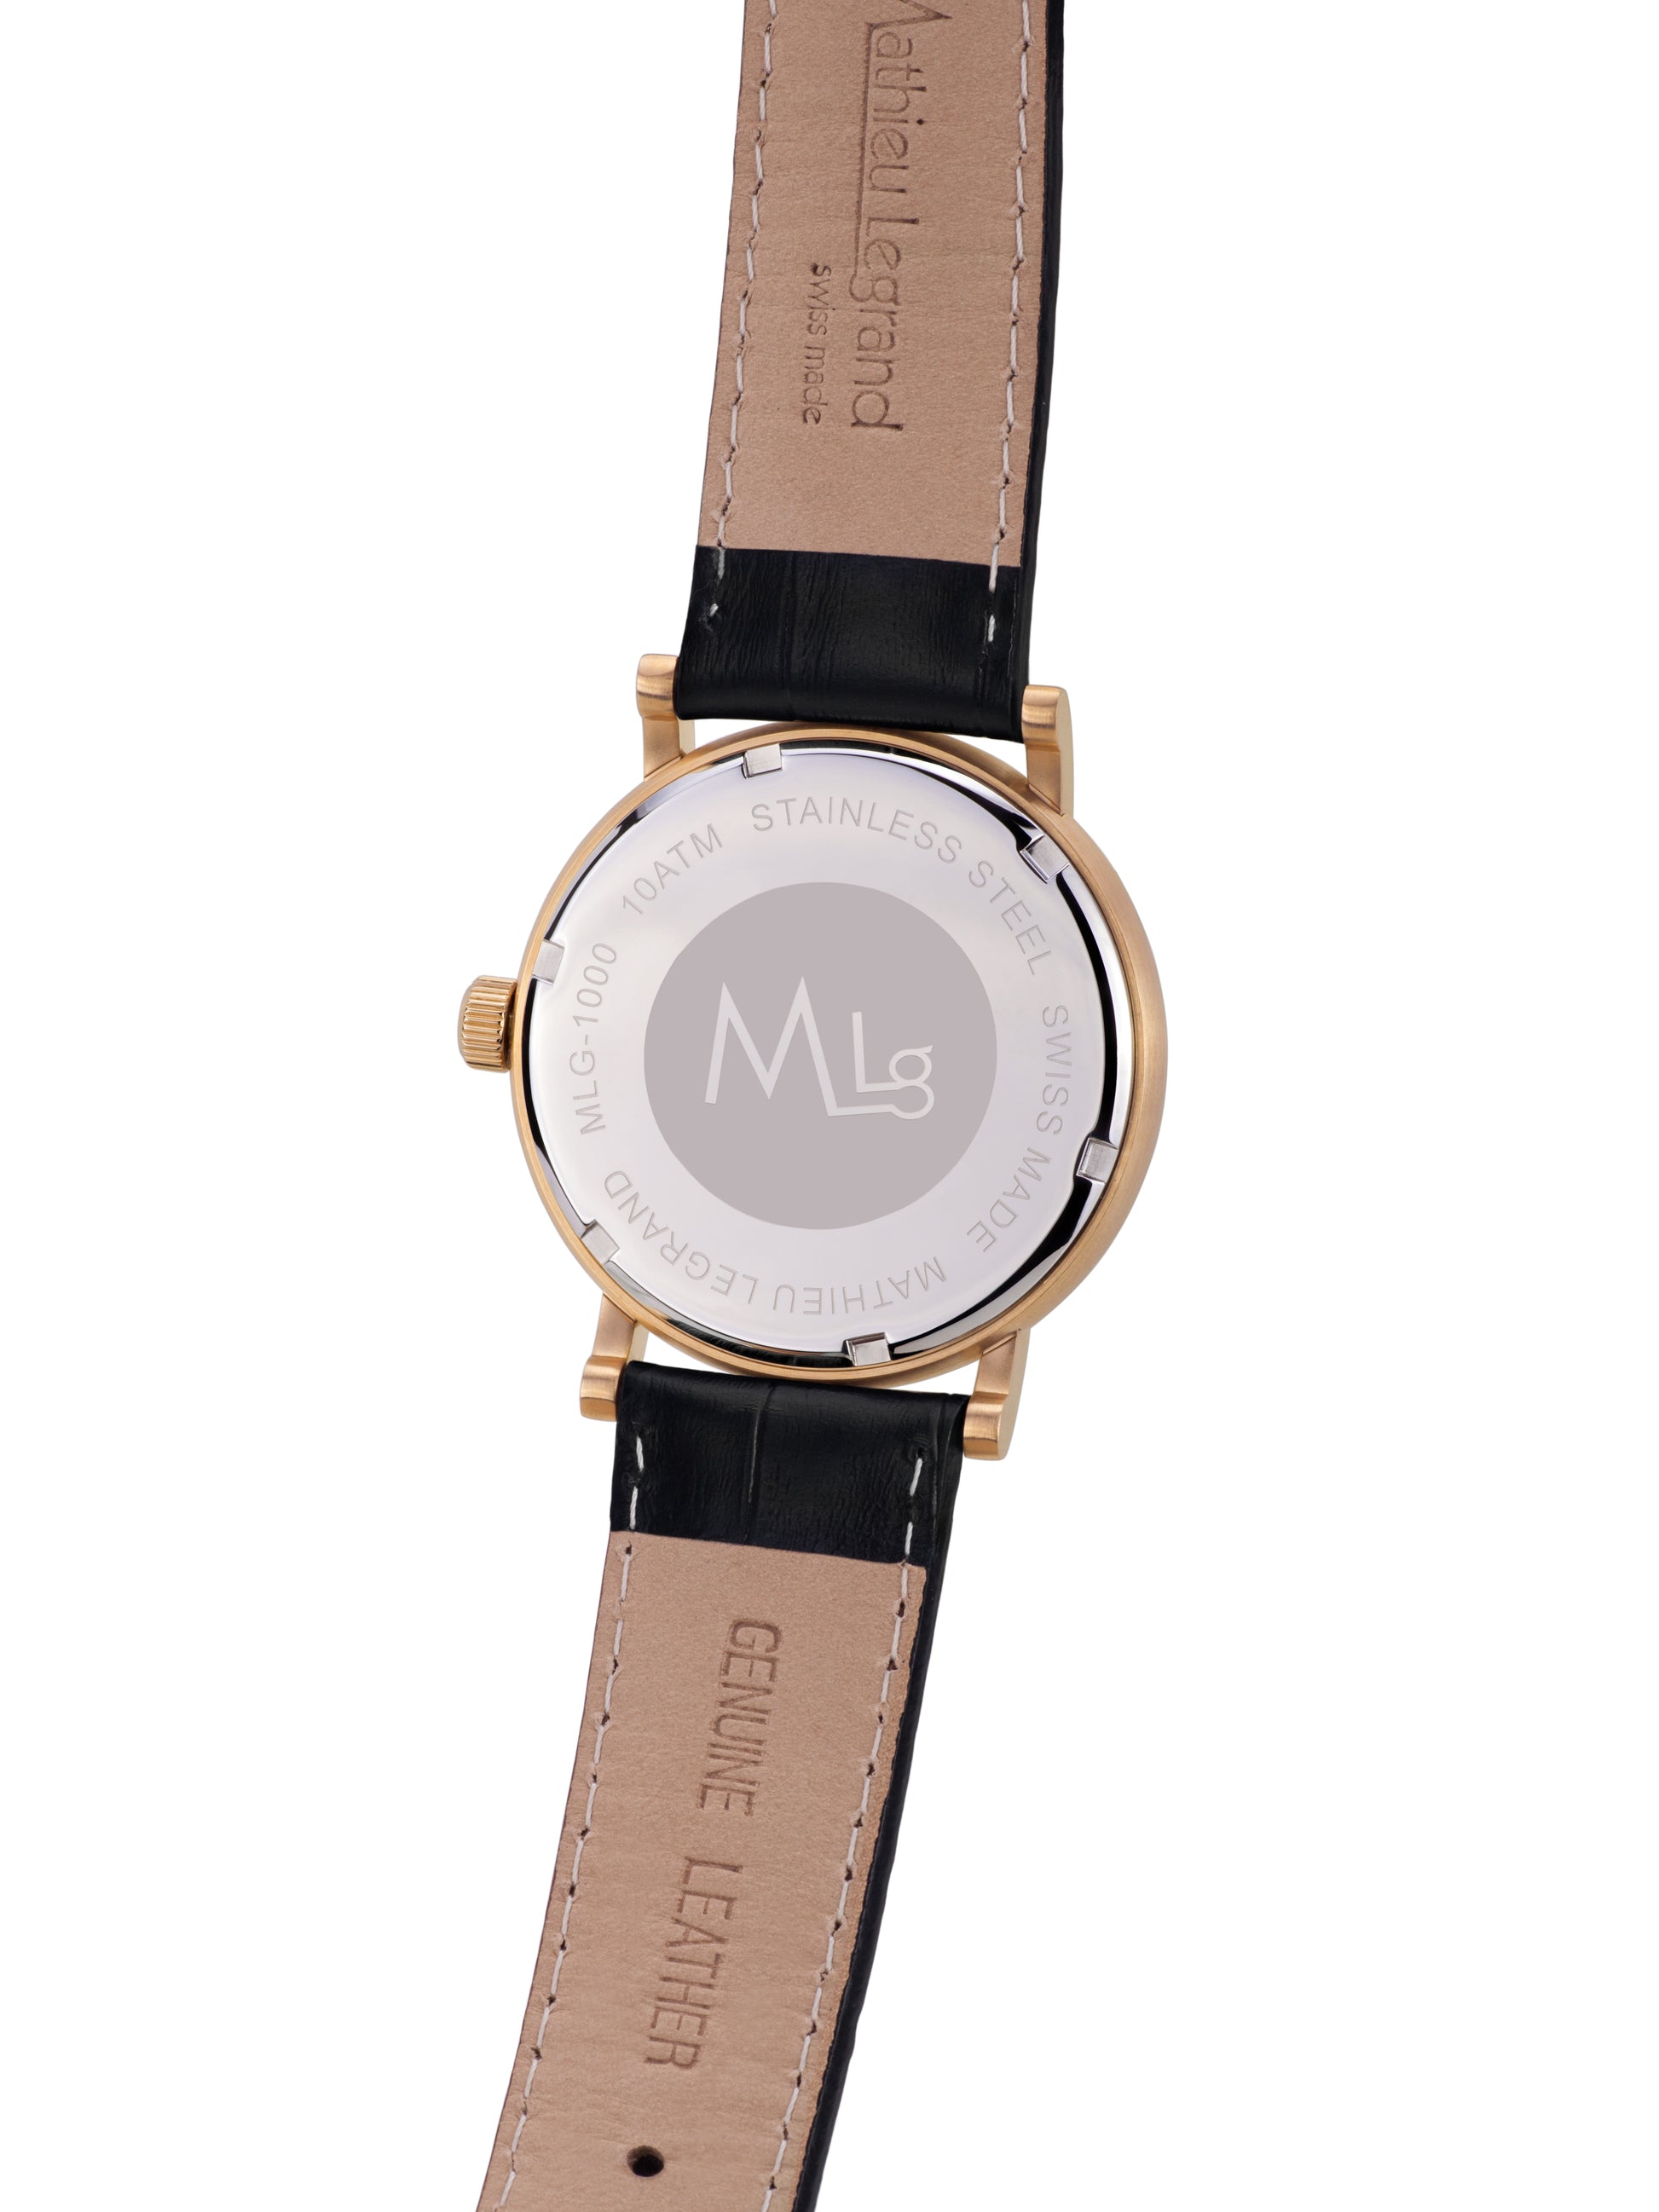 Automatic watches — Classique — Mathieu Legrand — gold IP silver